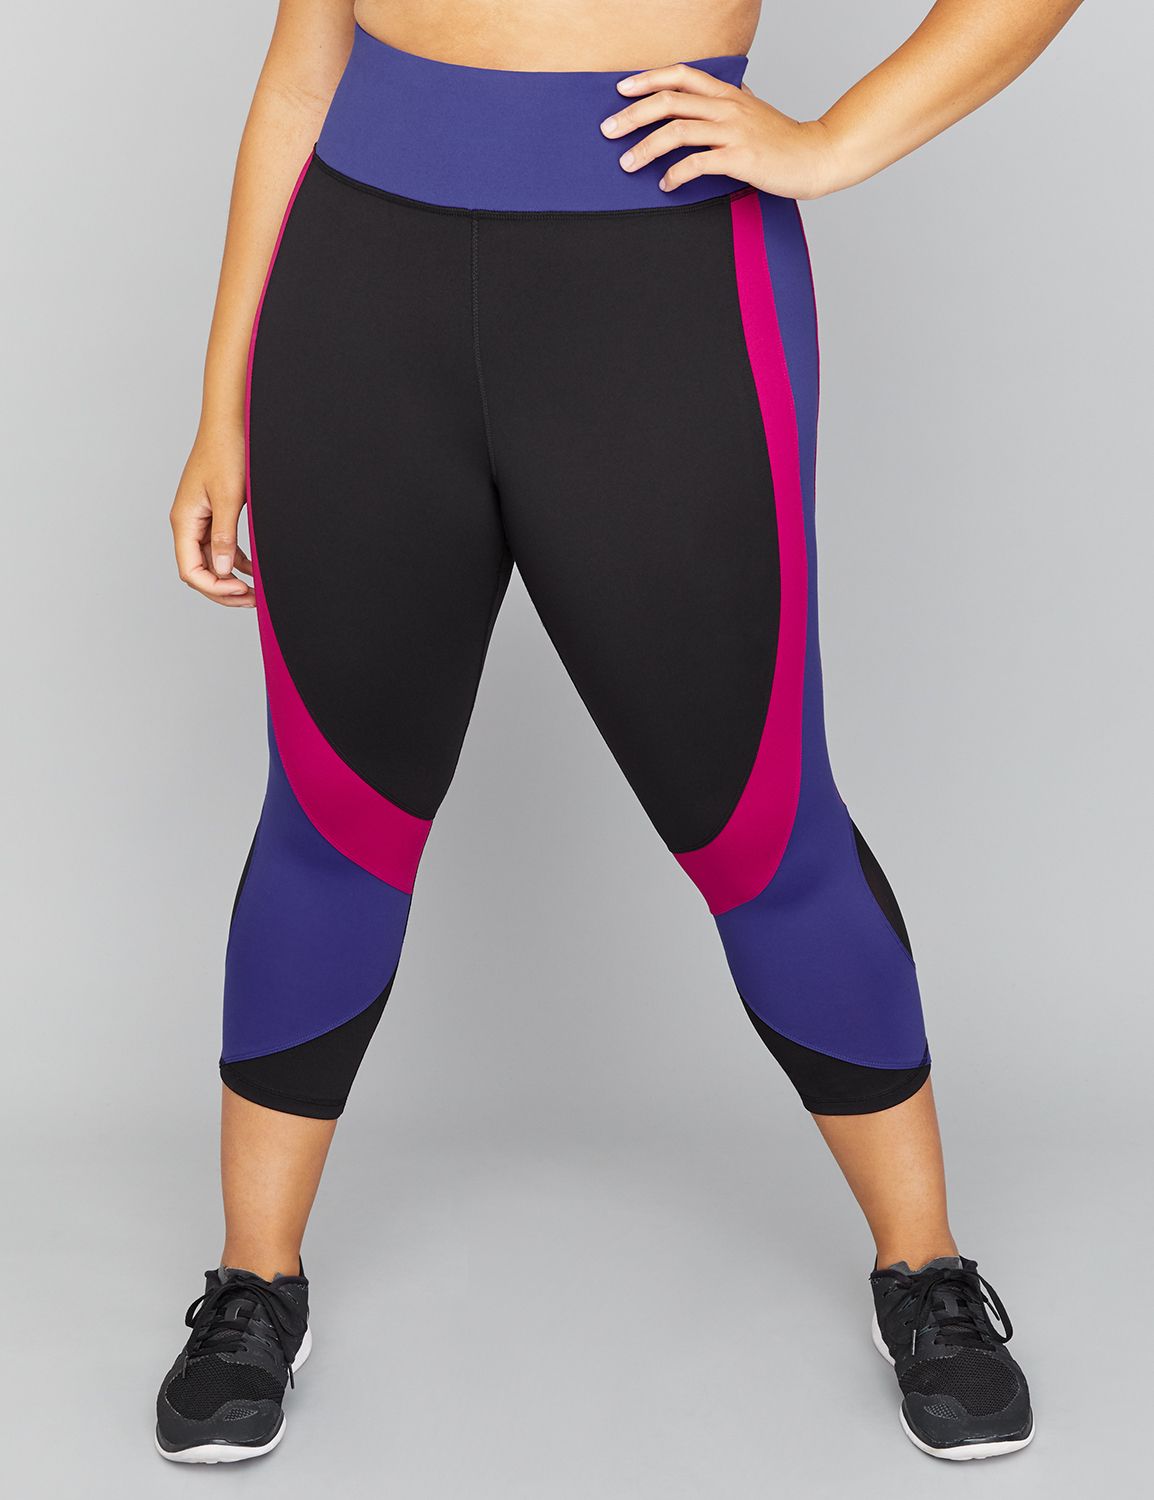 Plus Size Livi Active Workout Pants & Leggings | Lane Bryant